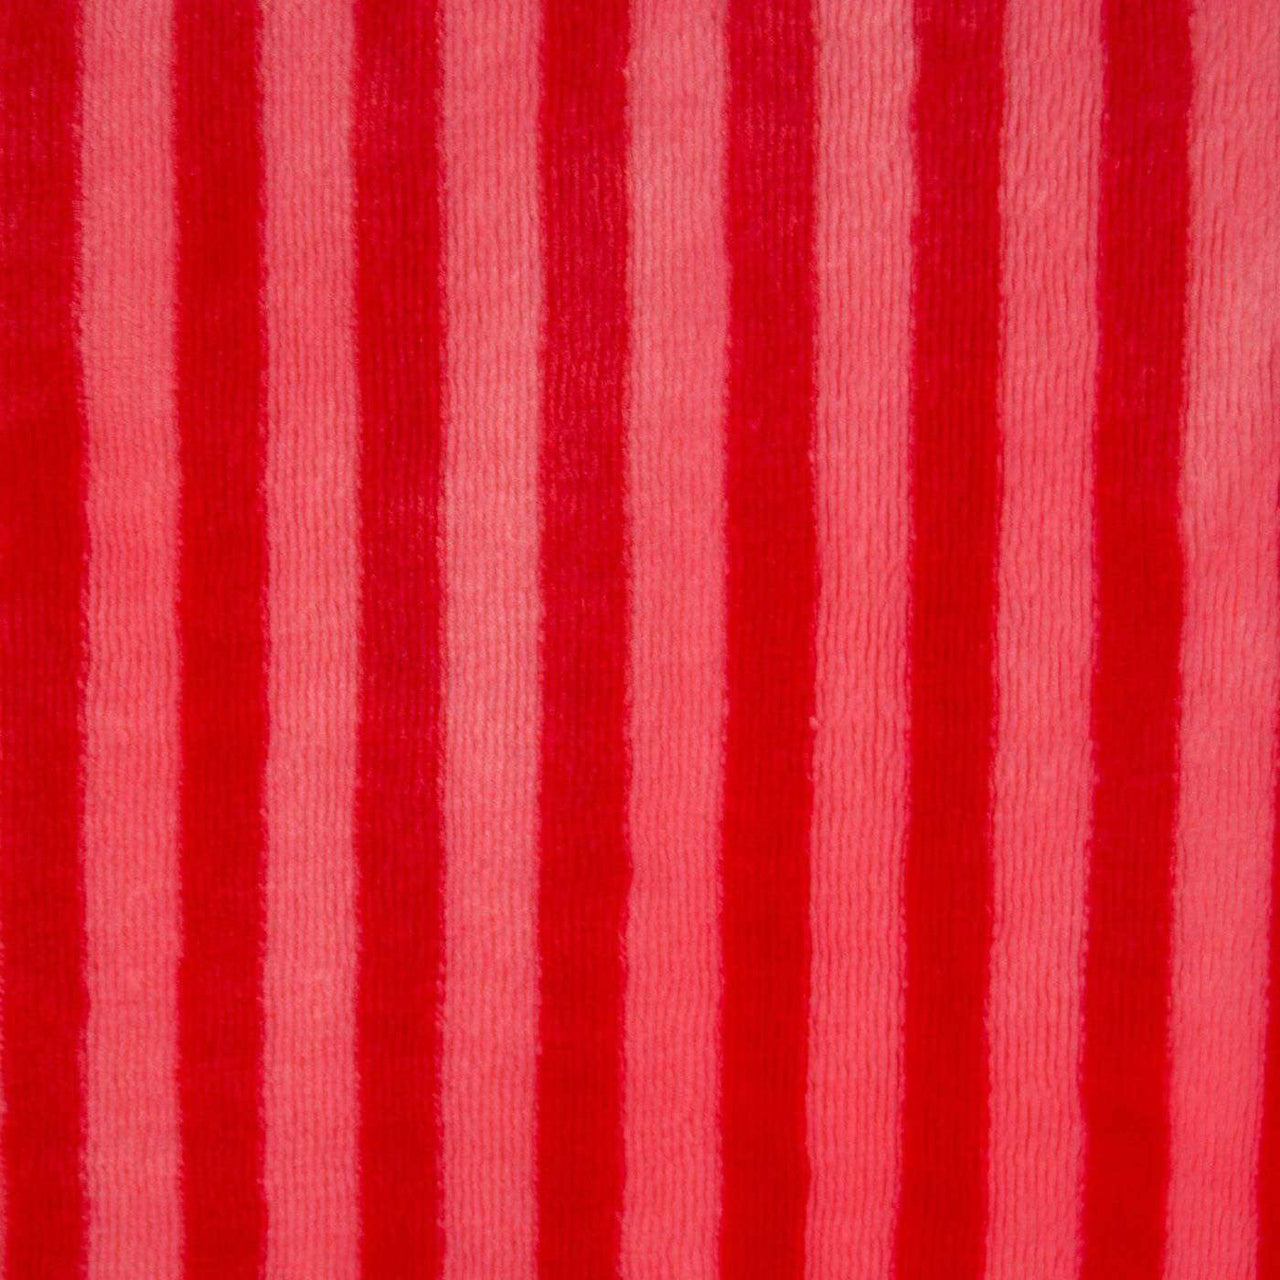 Red Stripe Throw Blanket 50X60 - The Fox Decor